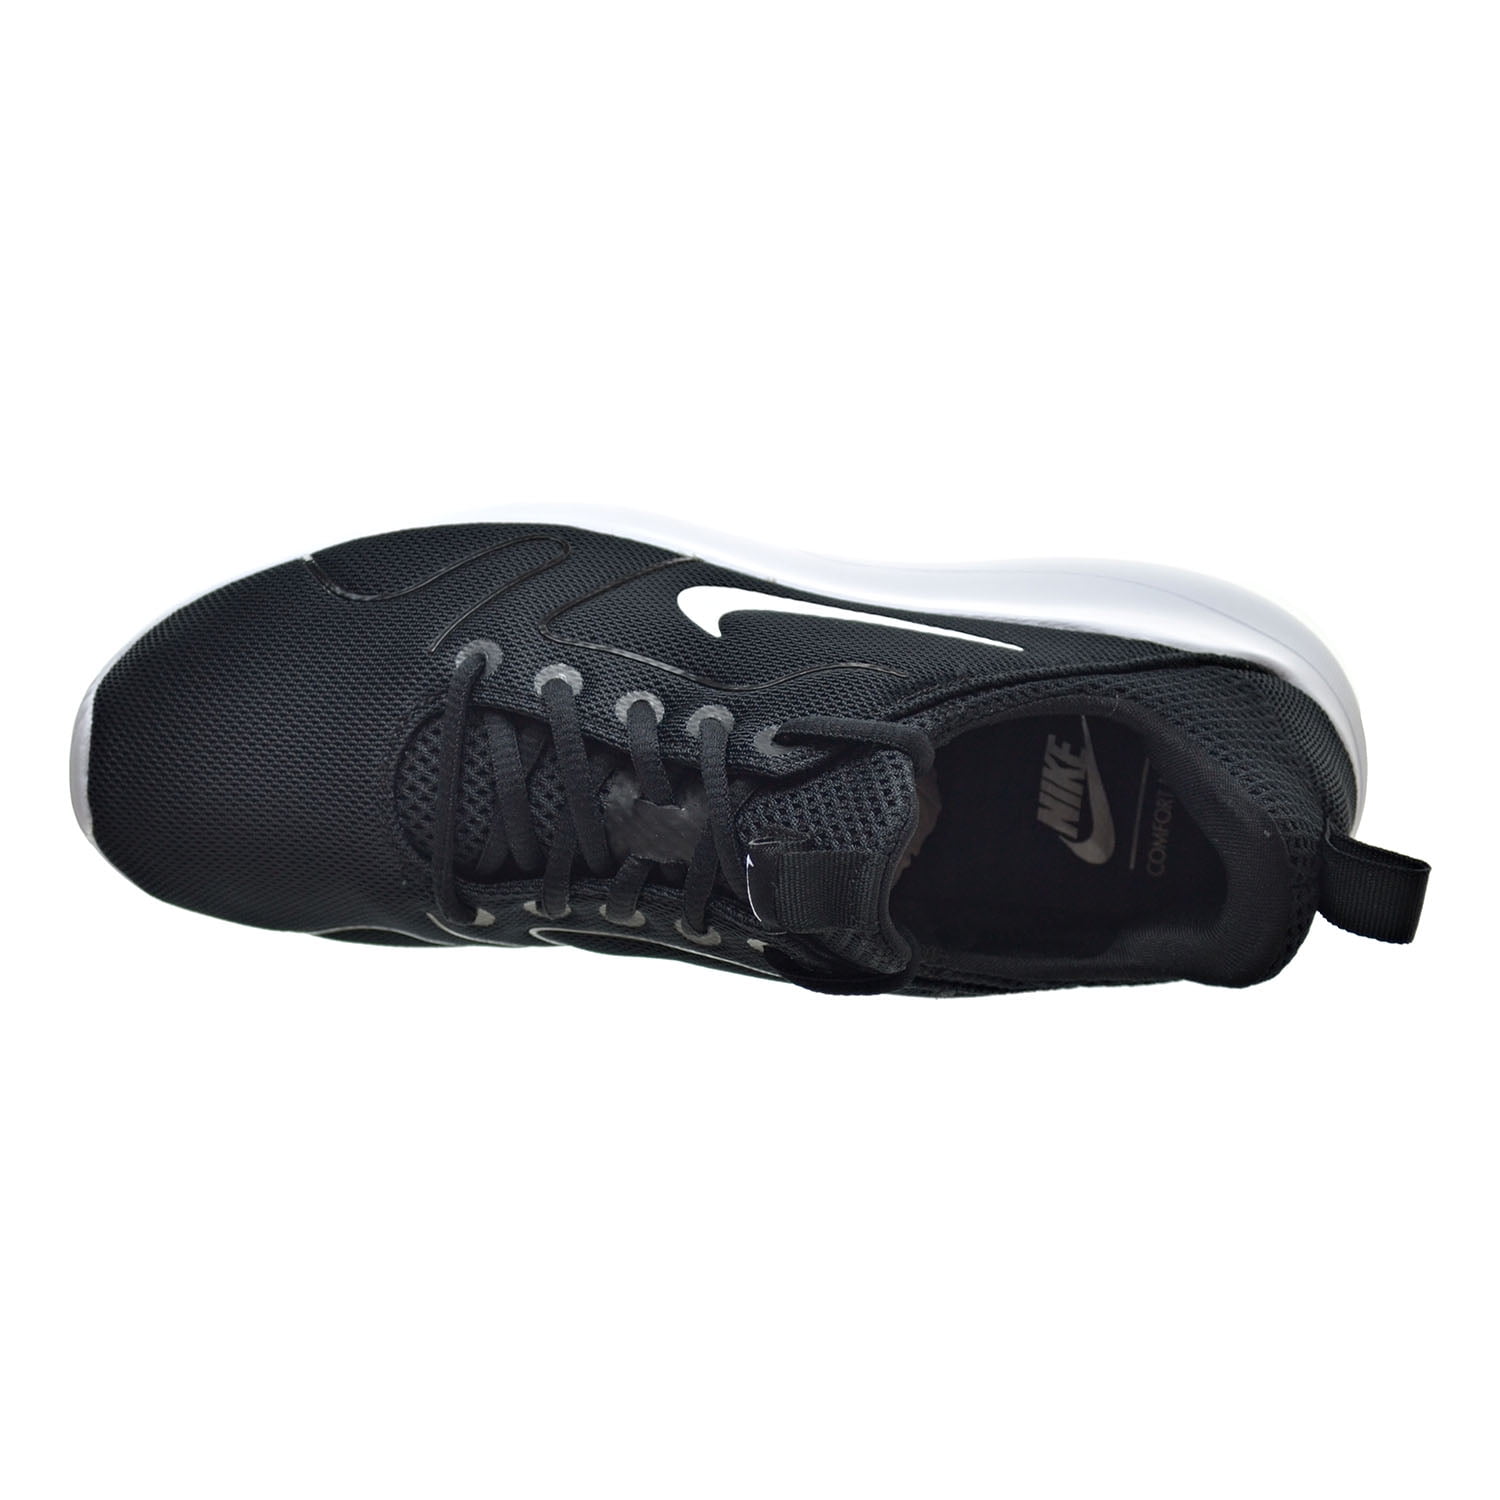 Uitgaand Ja kogel Nike Kaishi 2.0 Men's Shoes Black/White 833411-010 - Walmart.com